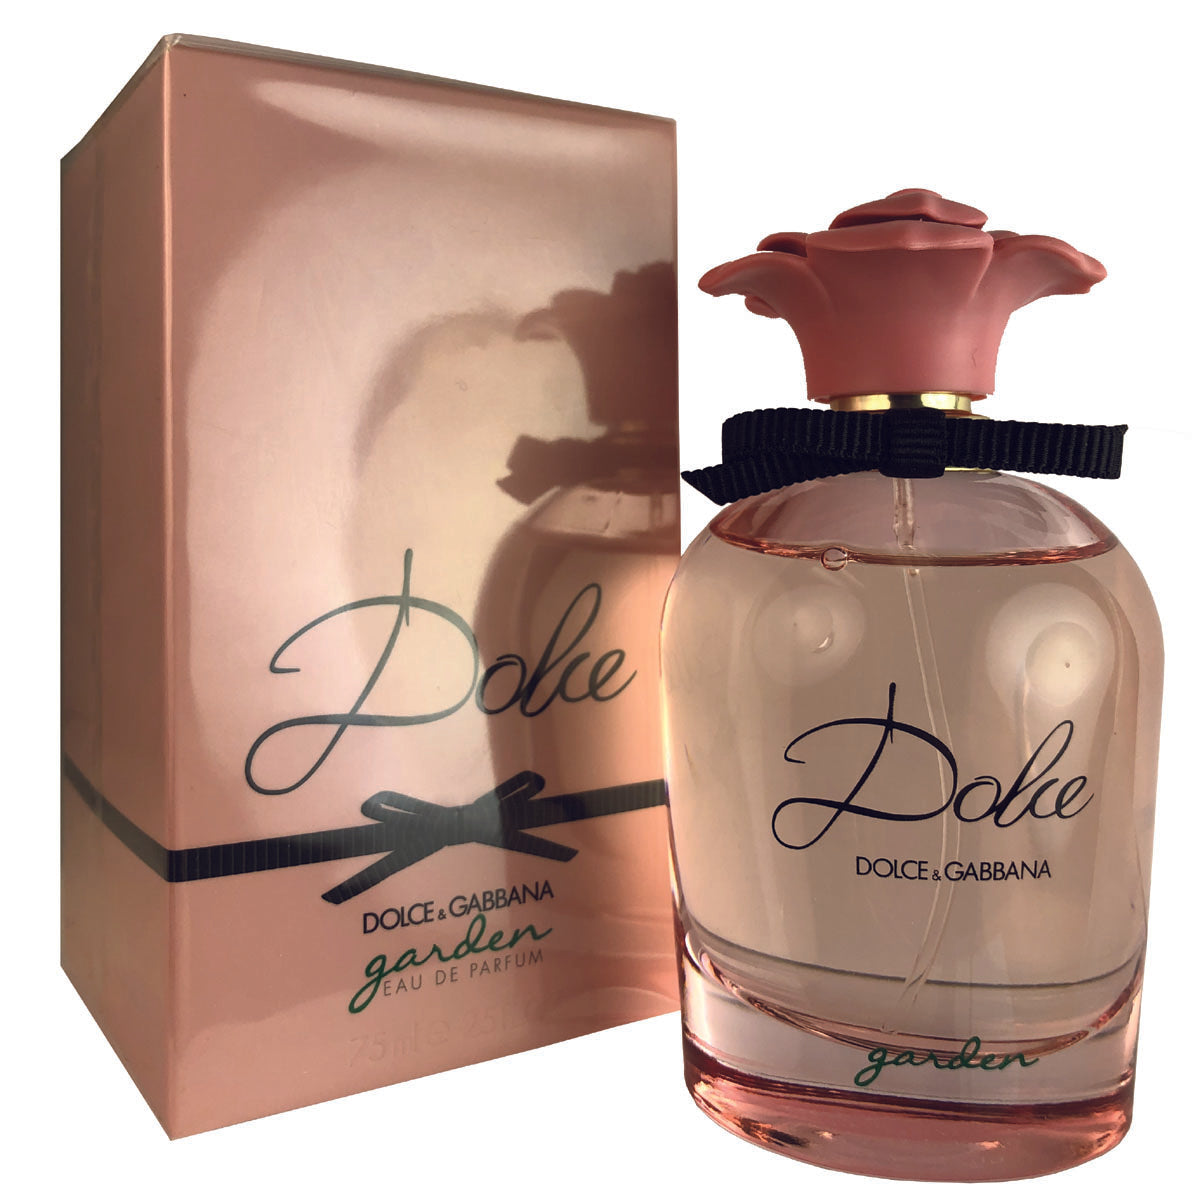 Dolce Garden for Women by Dolce & Gabbana 2.5 oz Eau de Parfum Spray